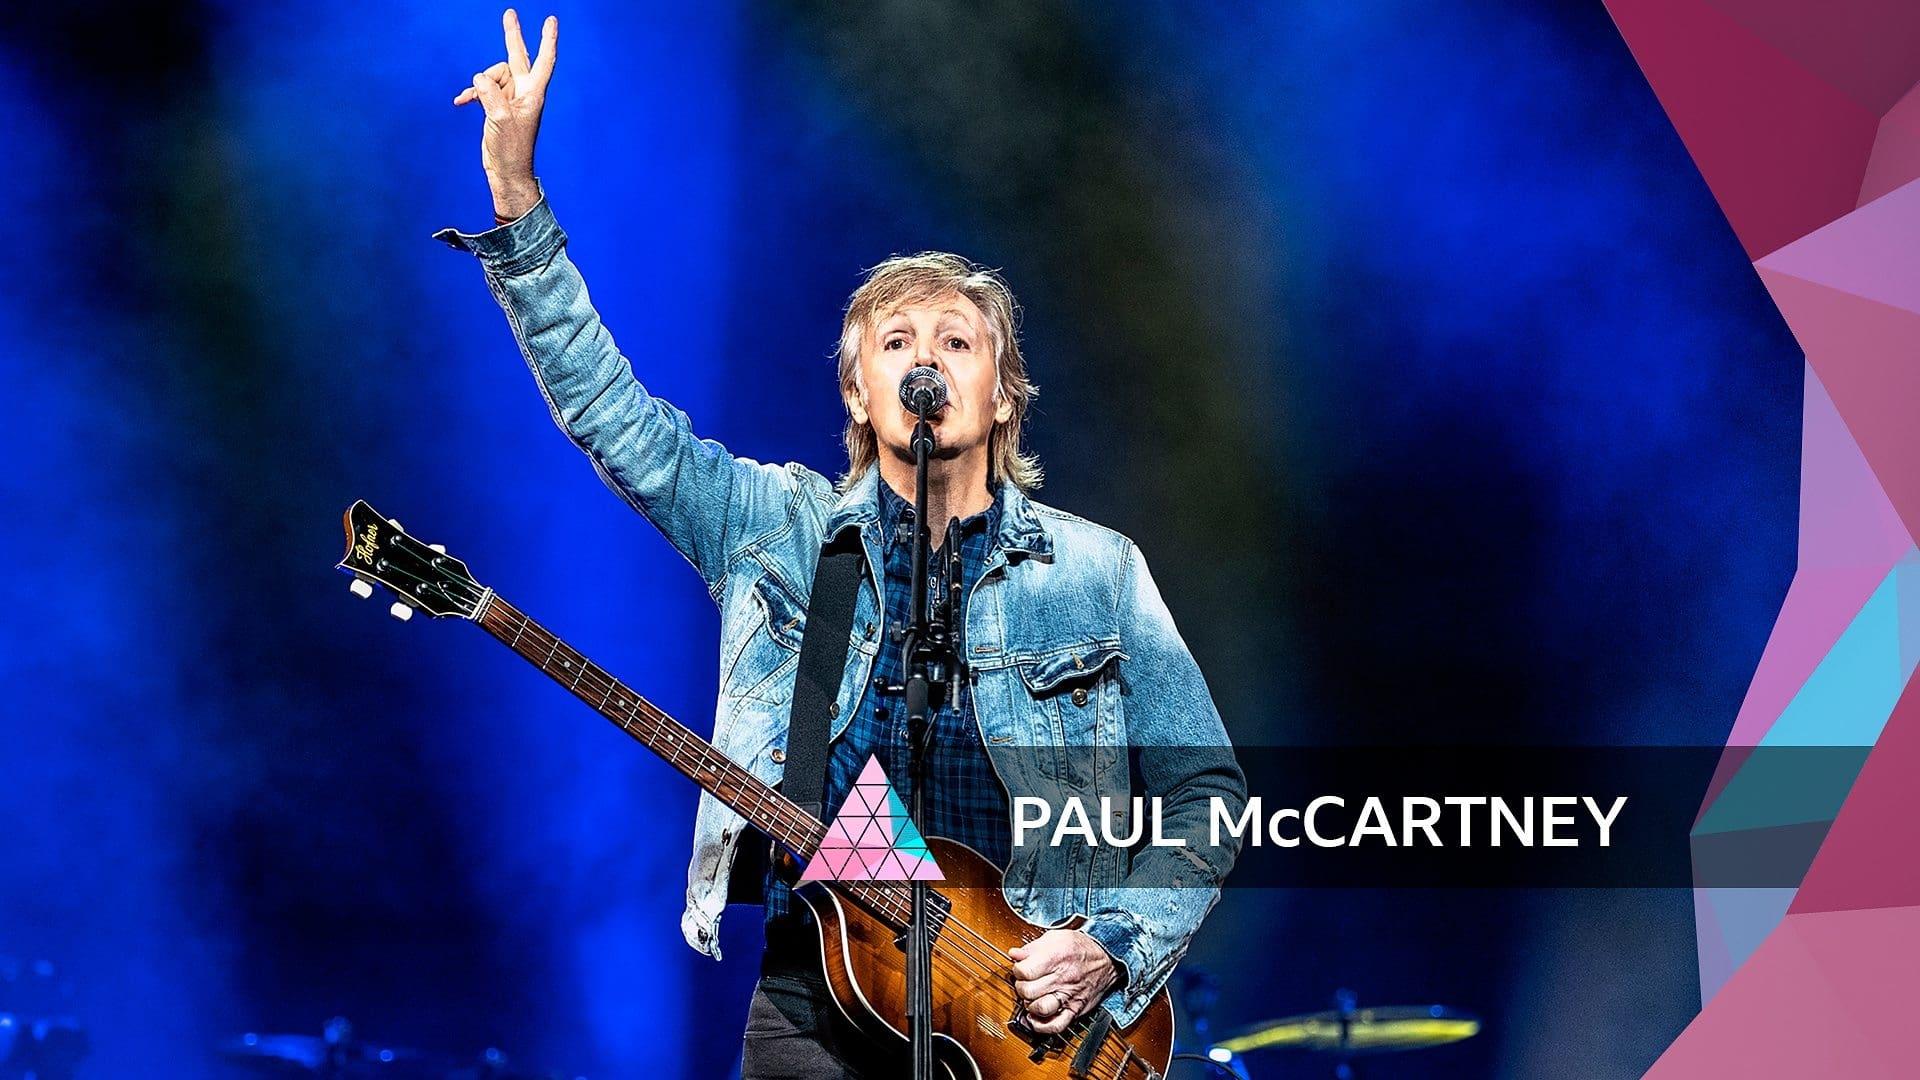 Paul McCartney at Glastonbury 2022 backdrop